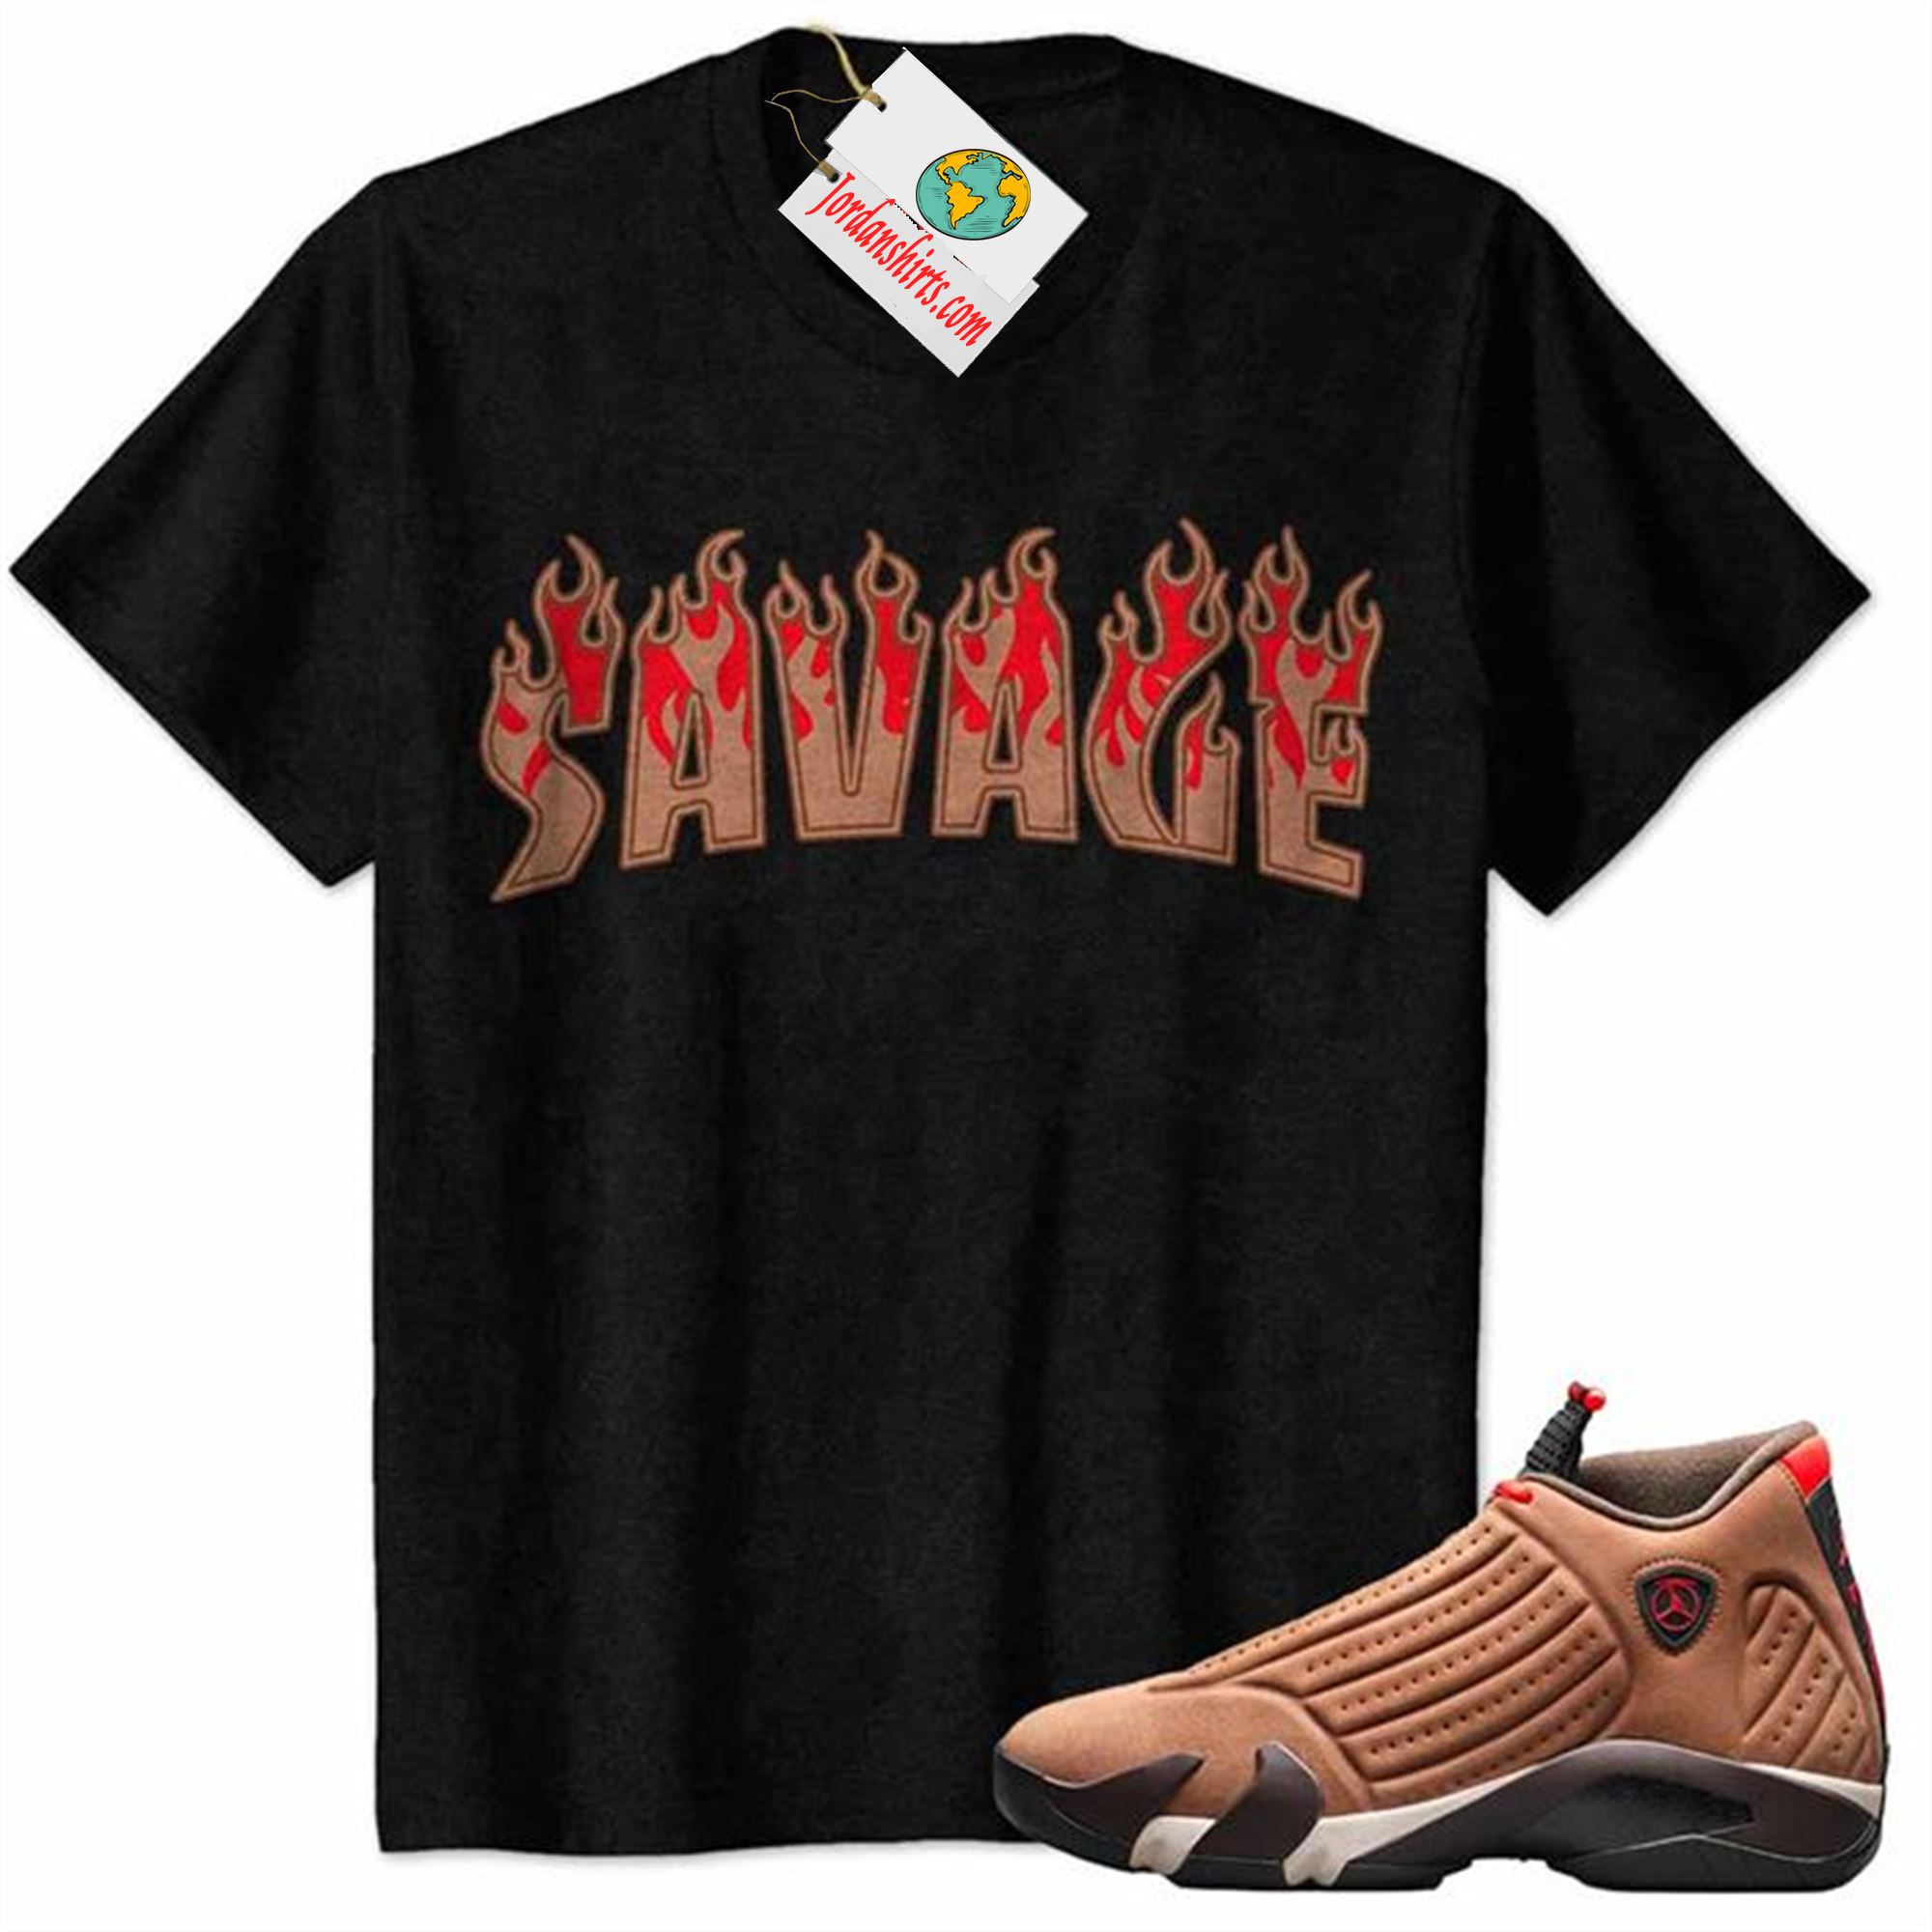 Jordan 14 Shirt, Savage Fire Style Black Air Jordan 14 Winterized 14s Full Size Up To 5xl